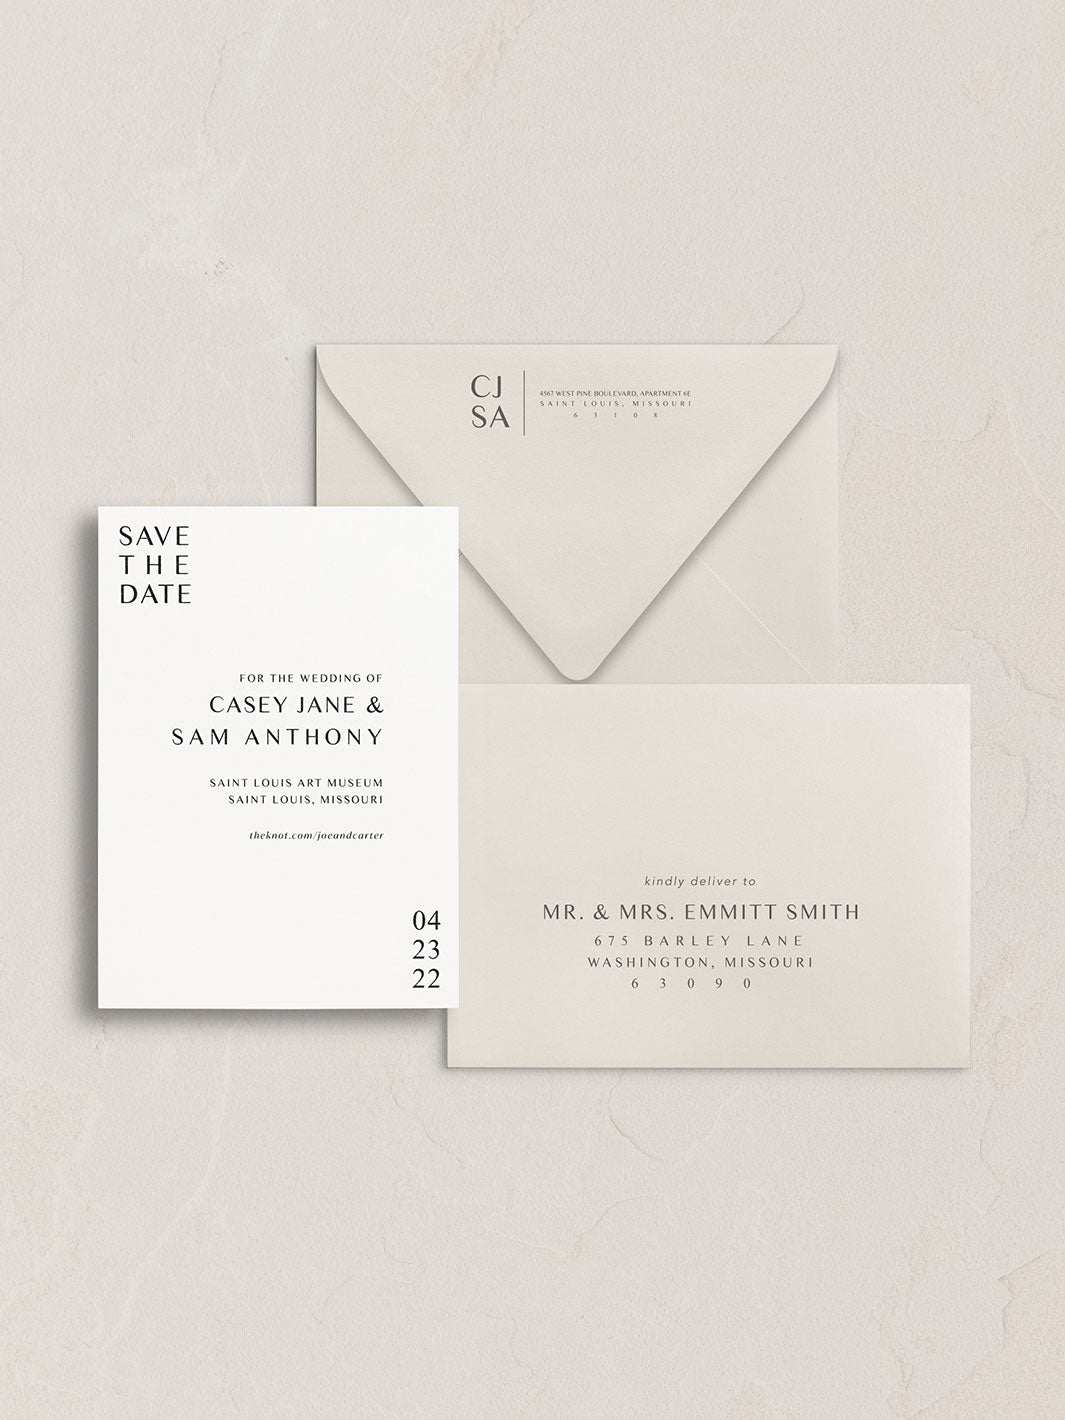 Casey Semi-Custom Wedding Invitation Suite from Leighwood Design Studio